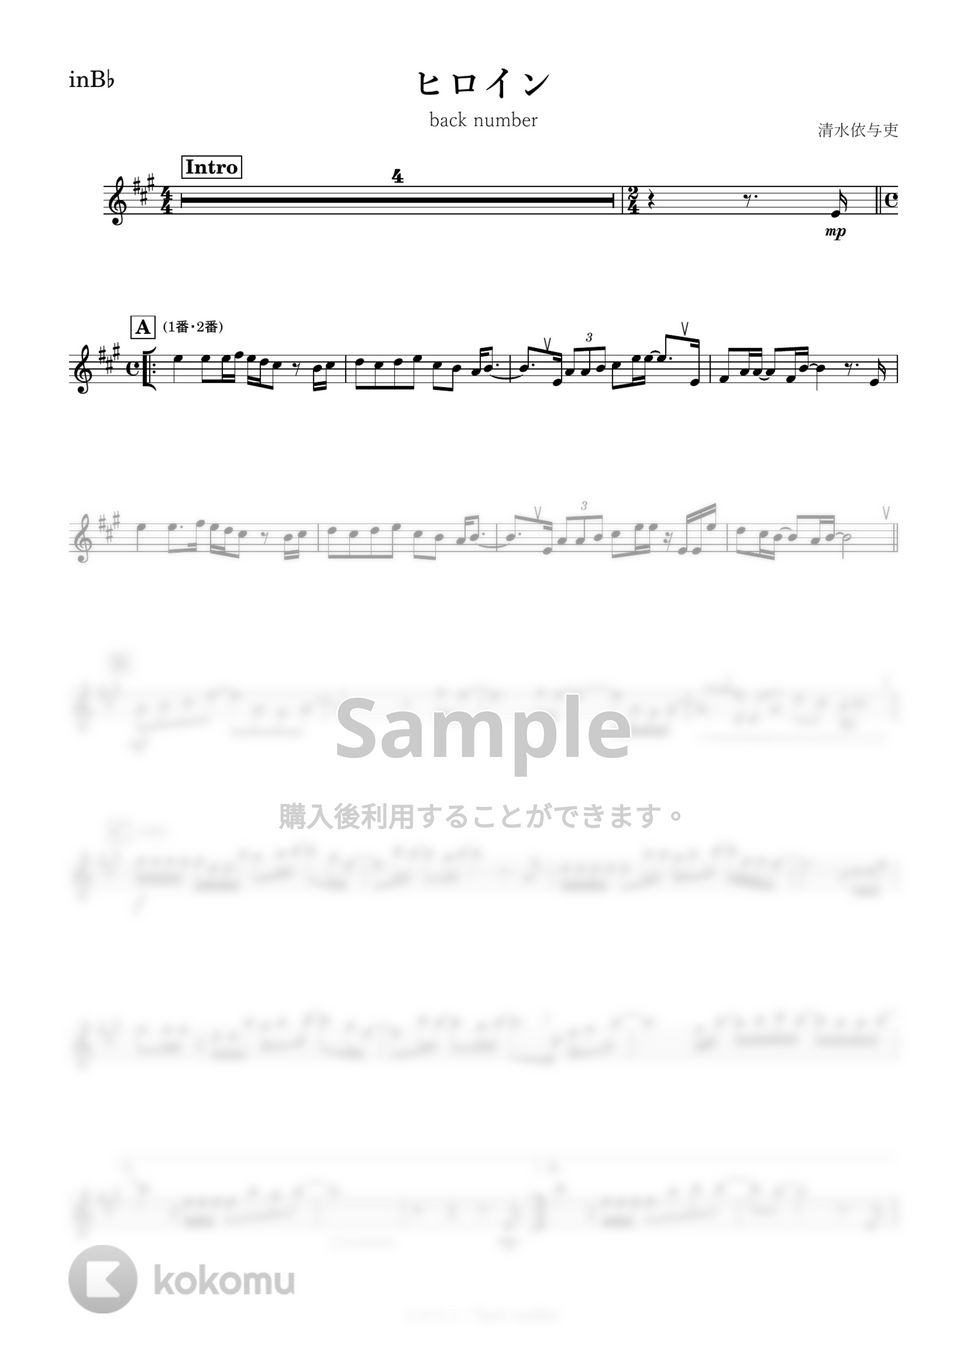 back number - ヒロイン (B♭) by kanamusic